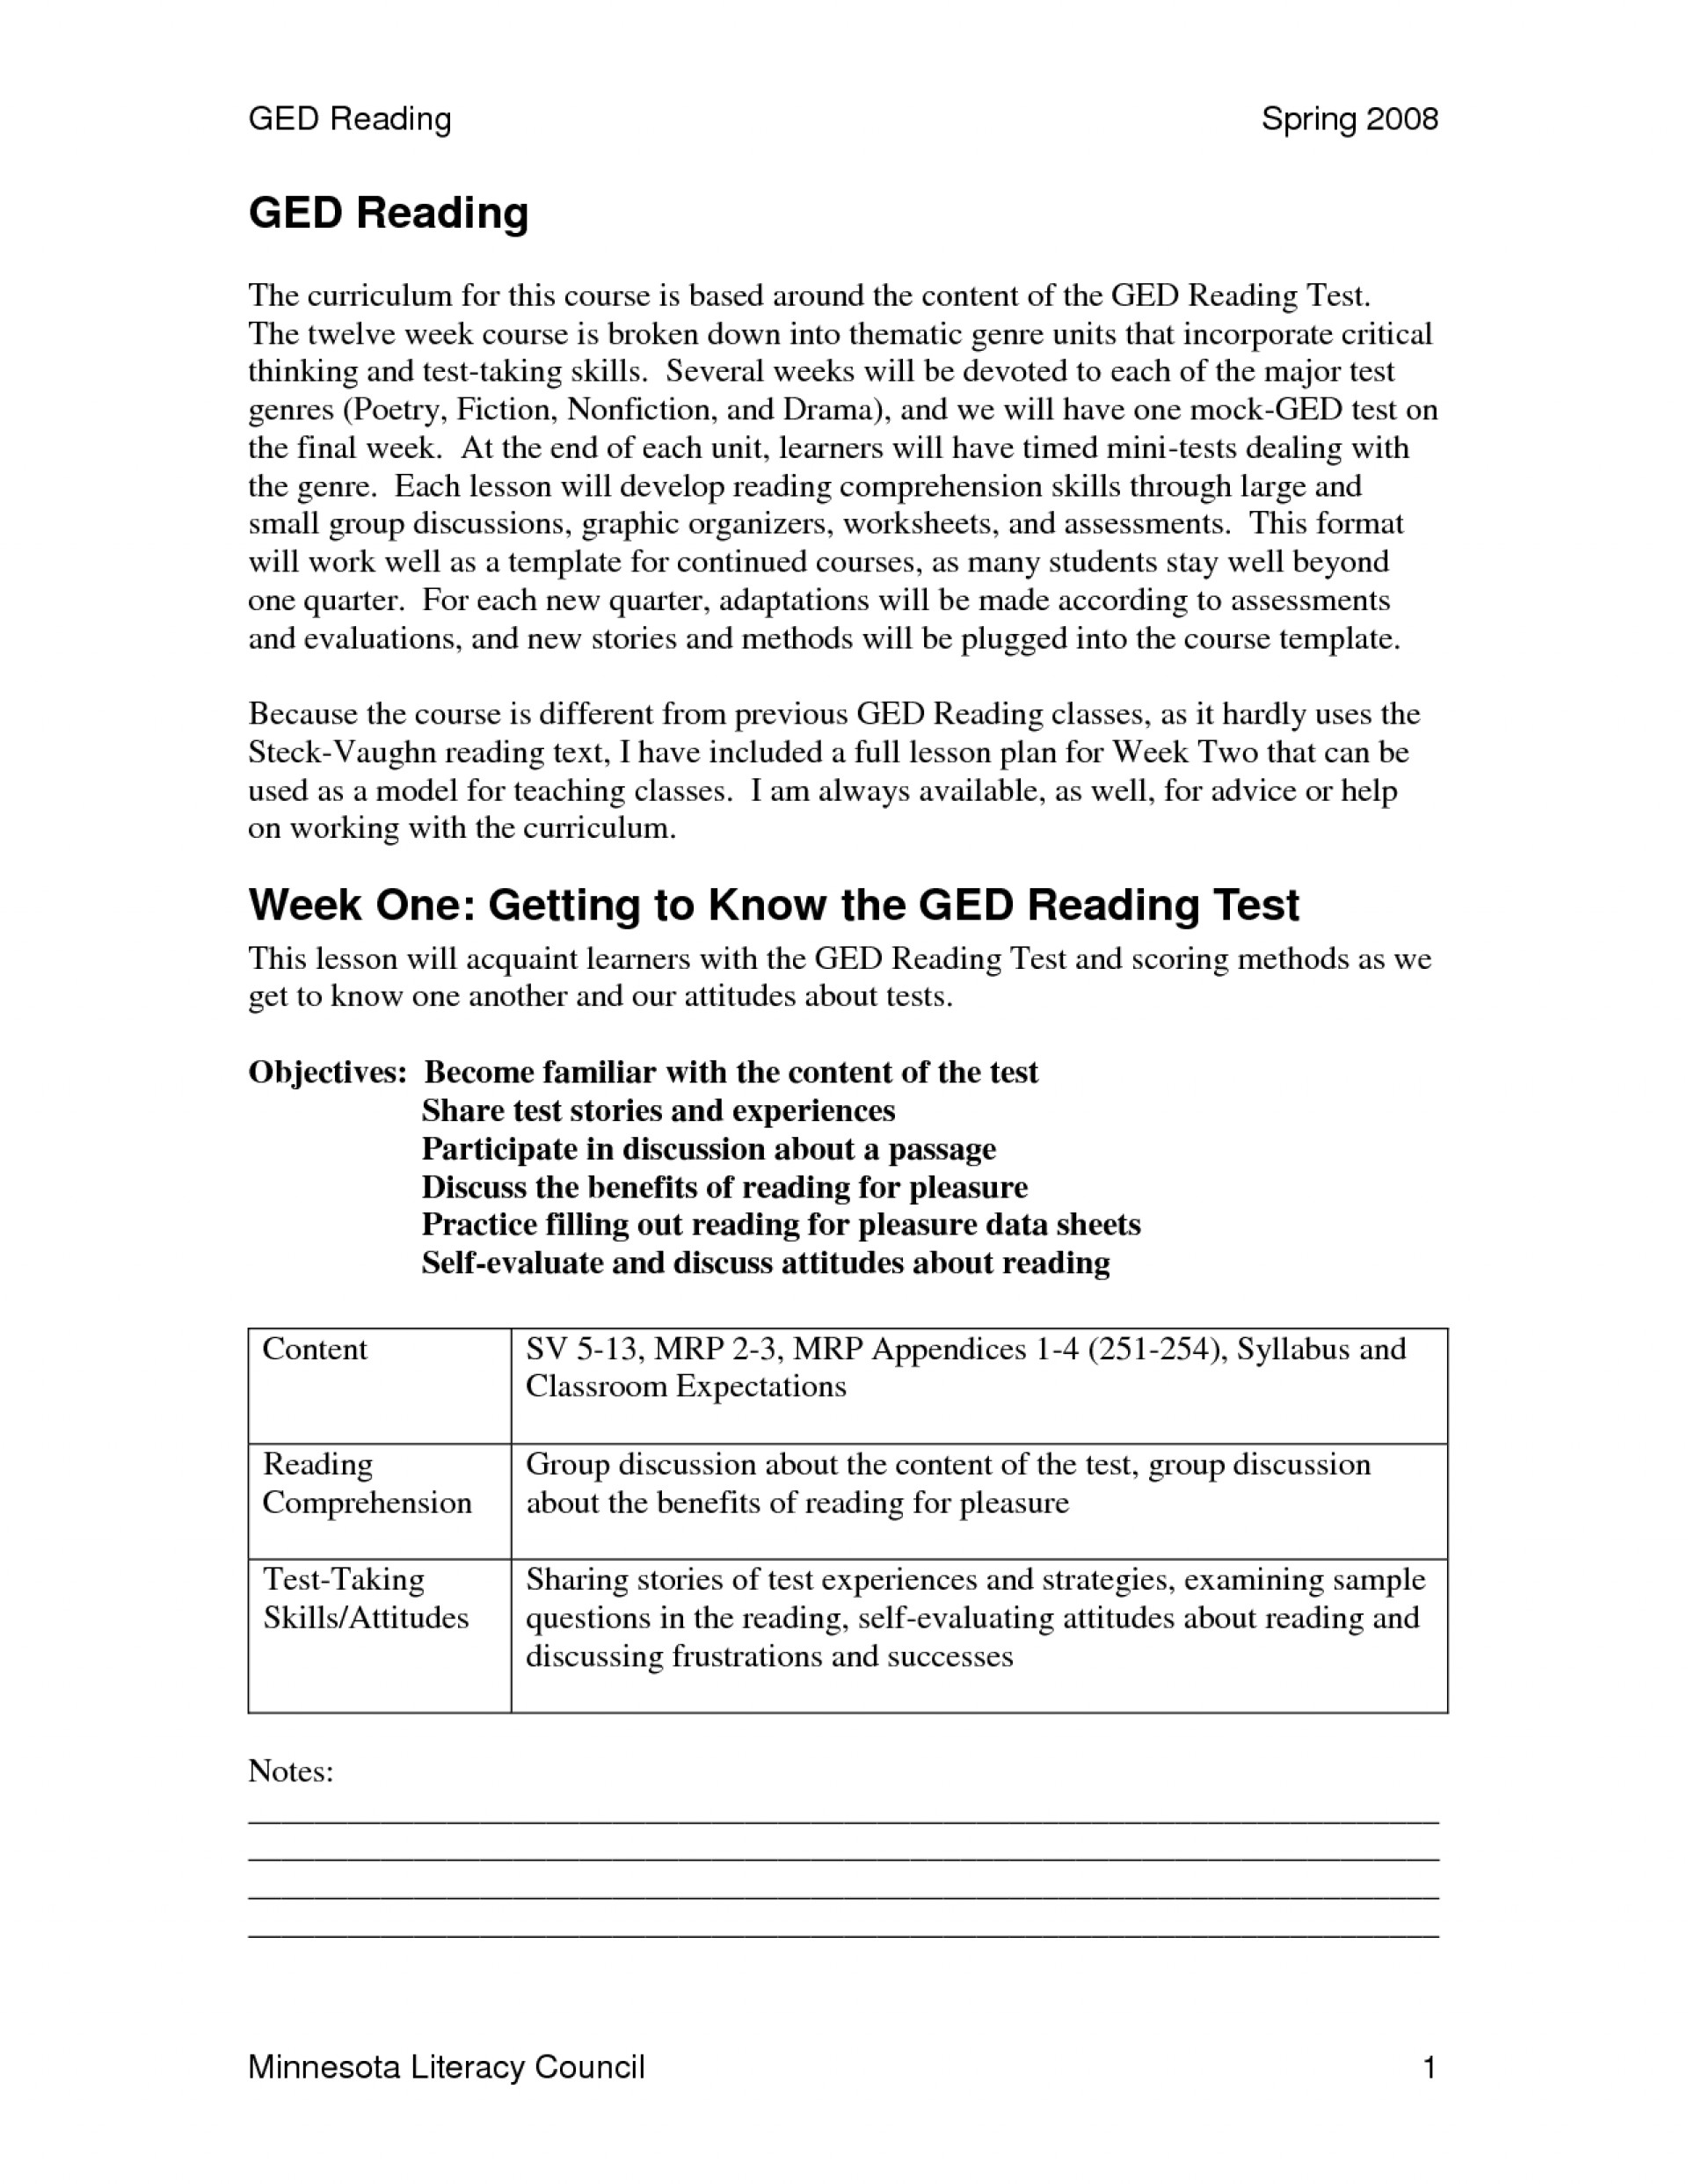 ged essay practice pdf